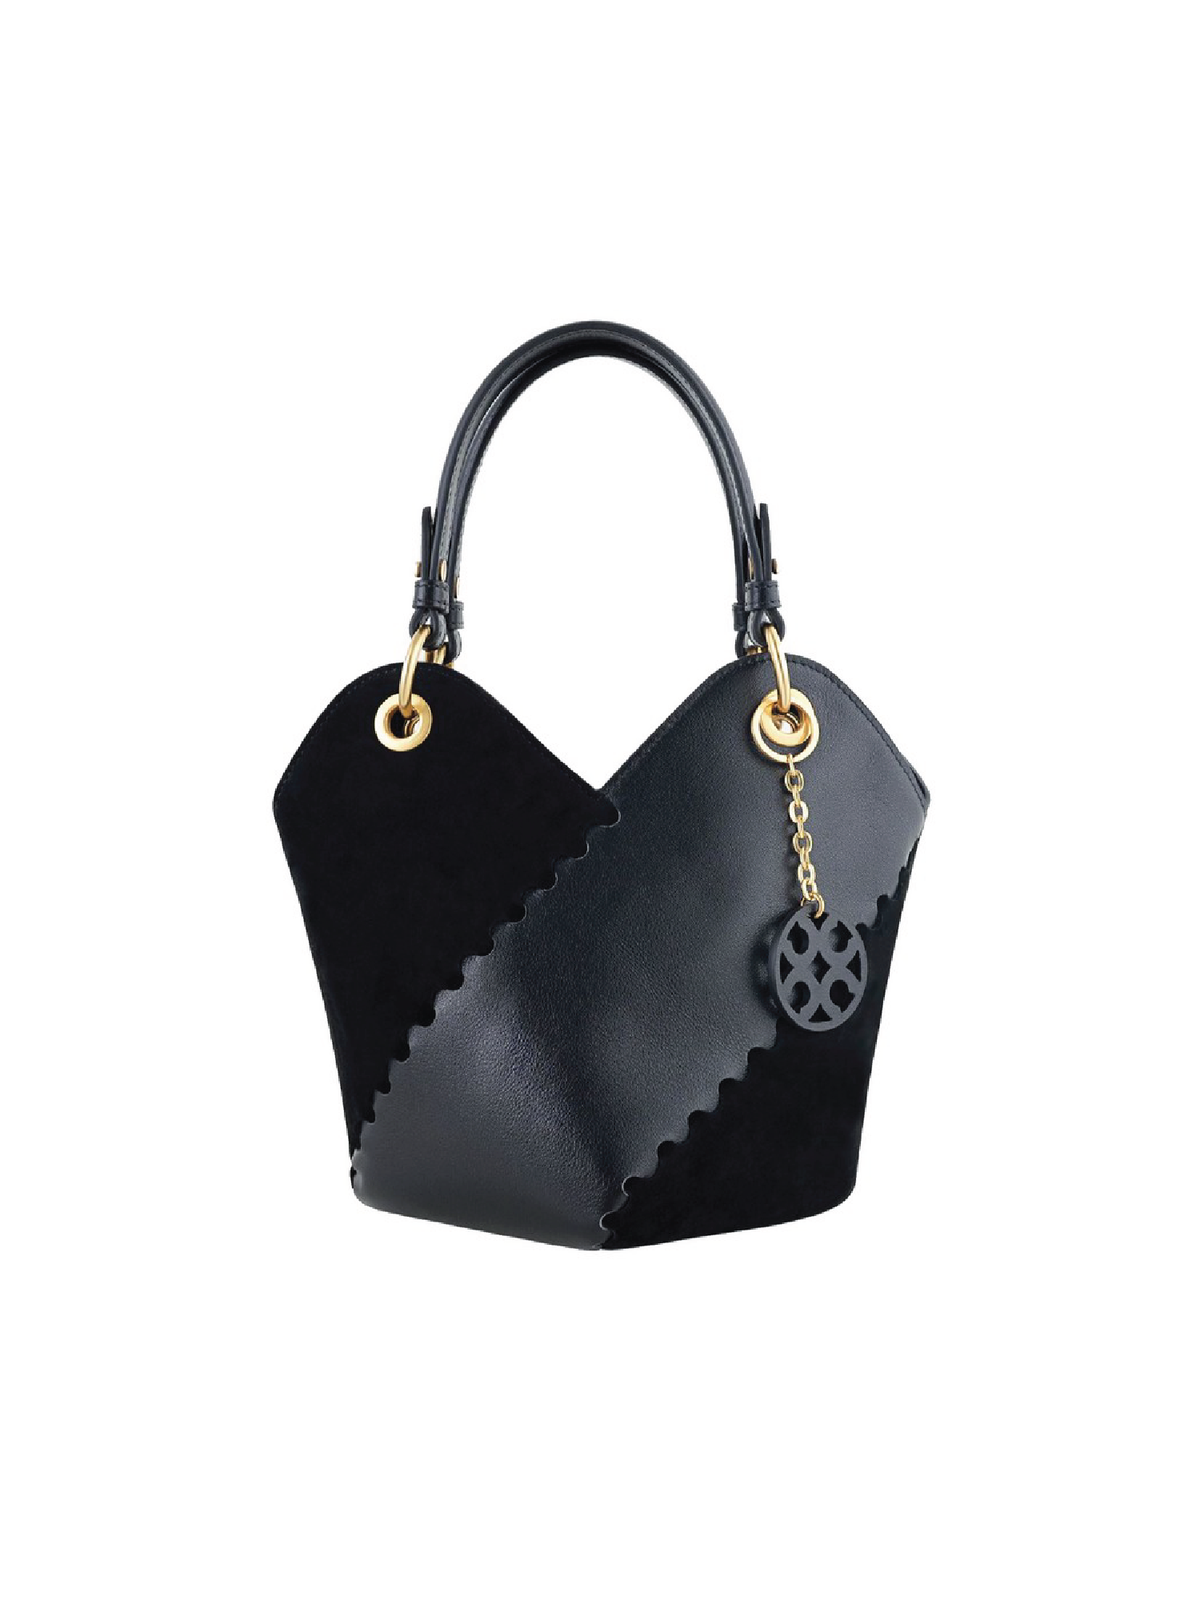 Shop Fashionable Handbags for Women Melbourne & Southland – Orange